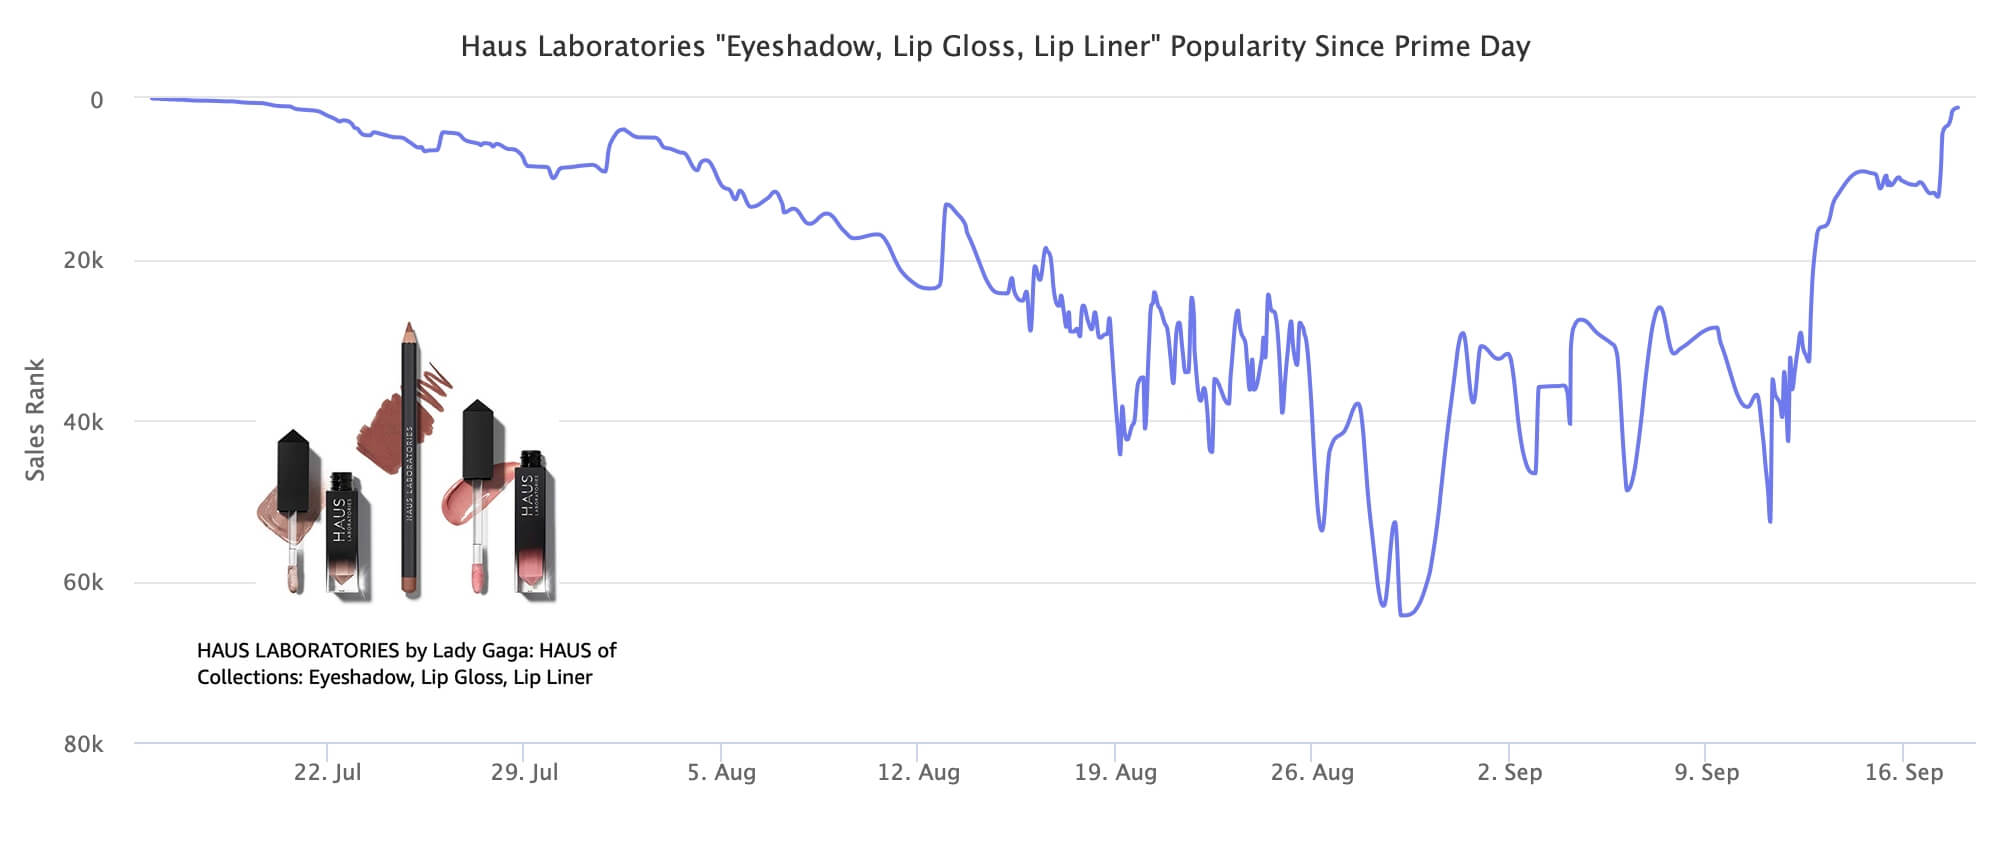 Haus Laboratories 'Eyeshadow, Lip Gloss, Lip Liner' Popularity Since Prime Day